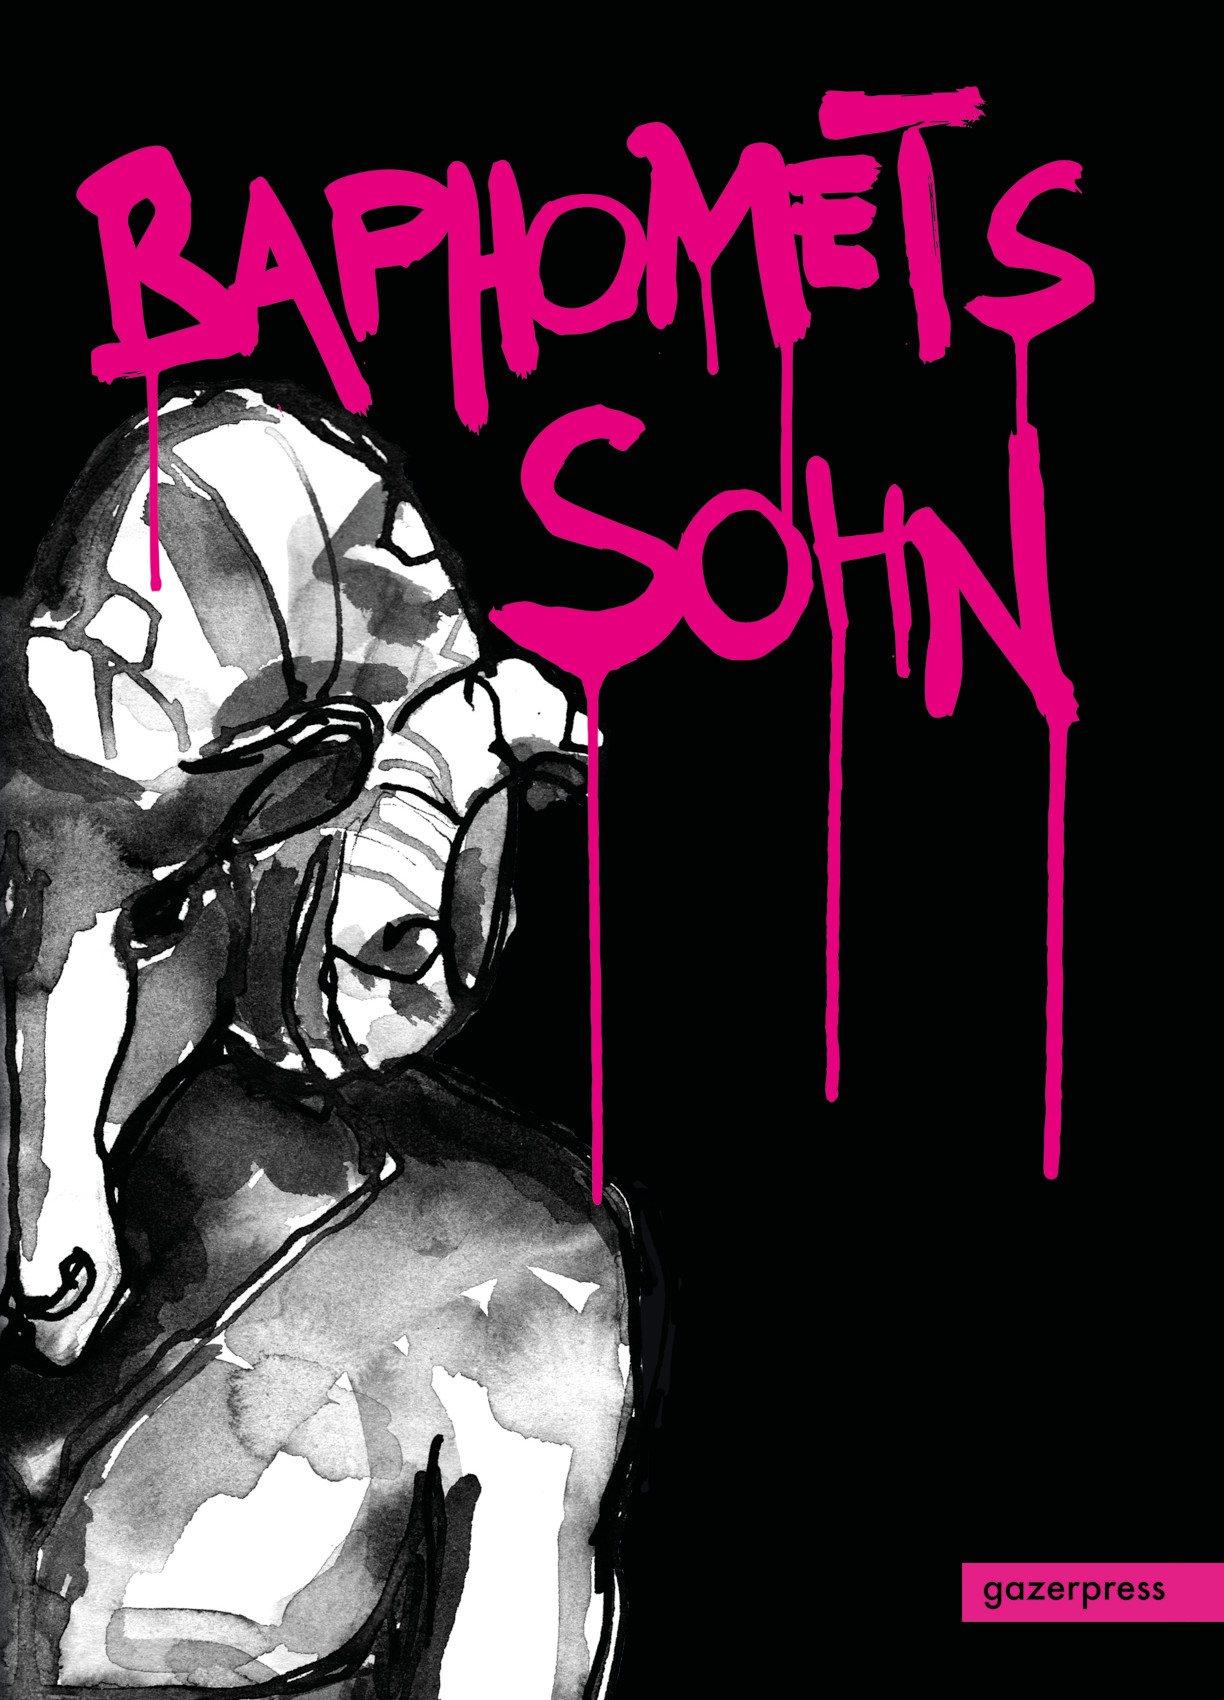 Baphomets Son, PDF